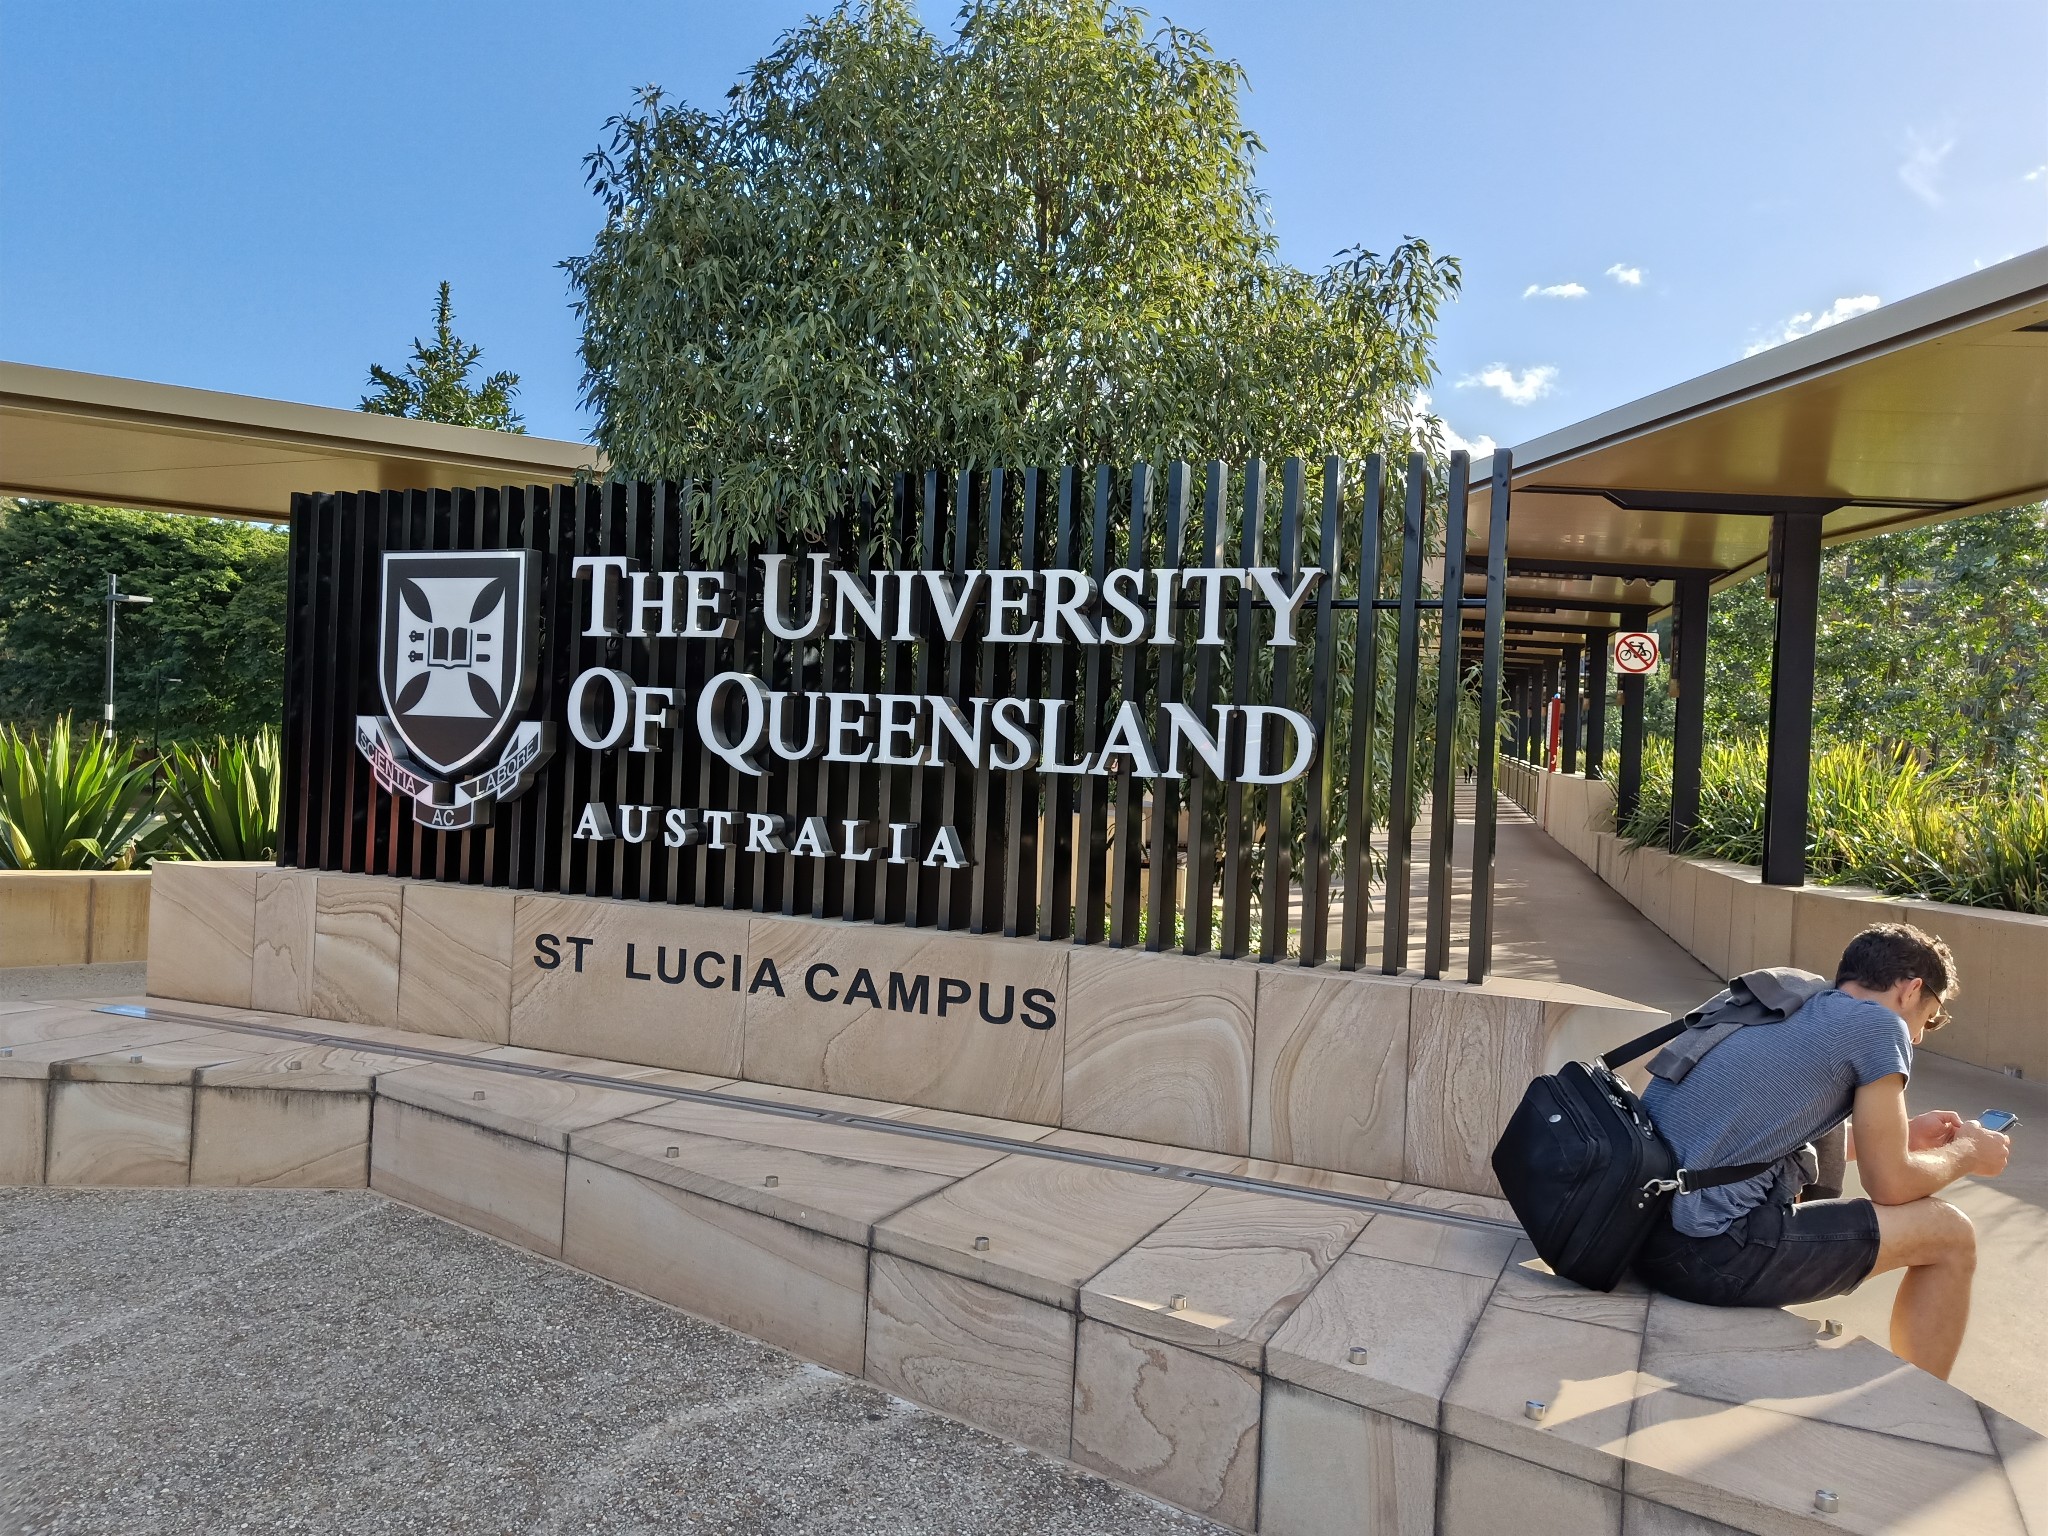 qs世界排名第48的昆士兰大学,也是许多人来到布里斯班来参观的首选之